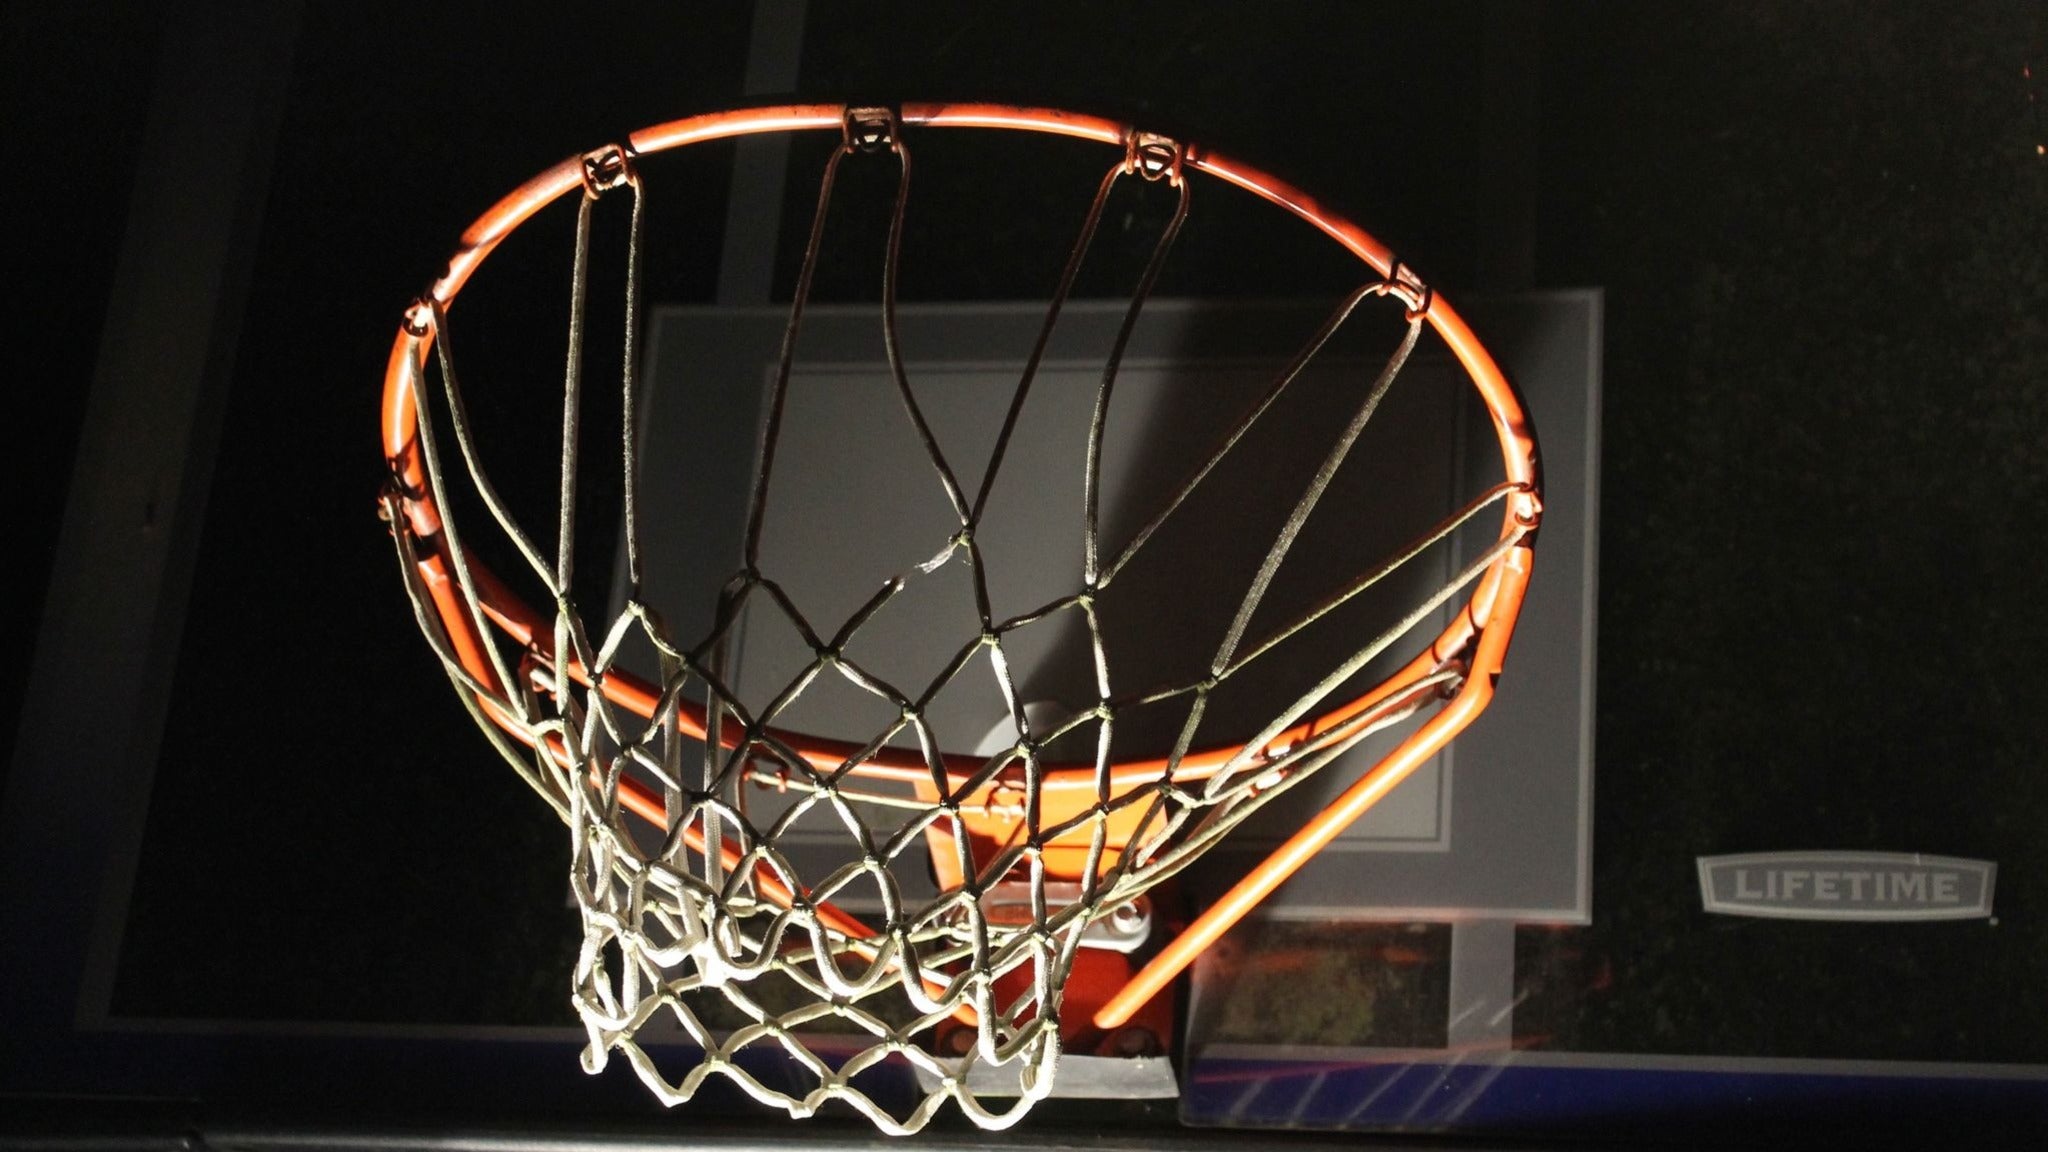 University of Minnesota Golden Gophers Basketball presale information on freepresalepasswords.com